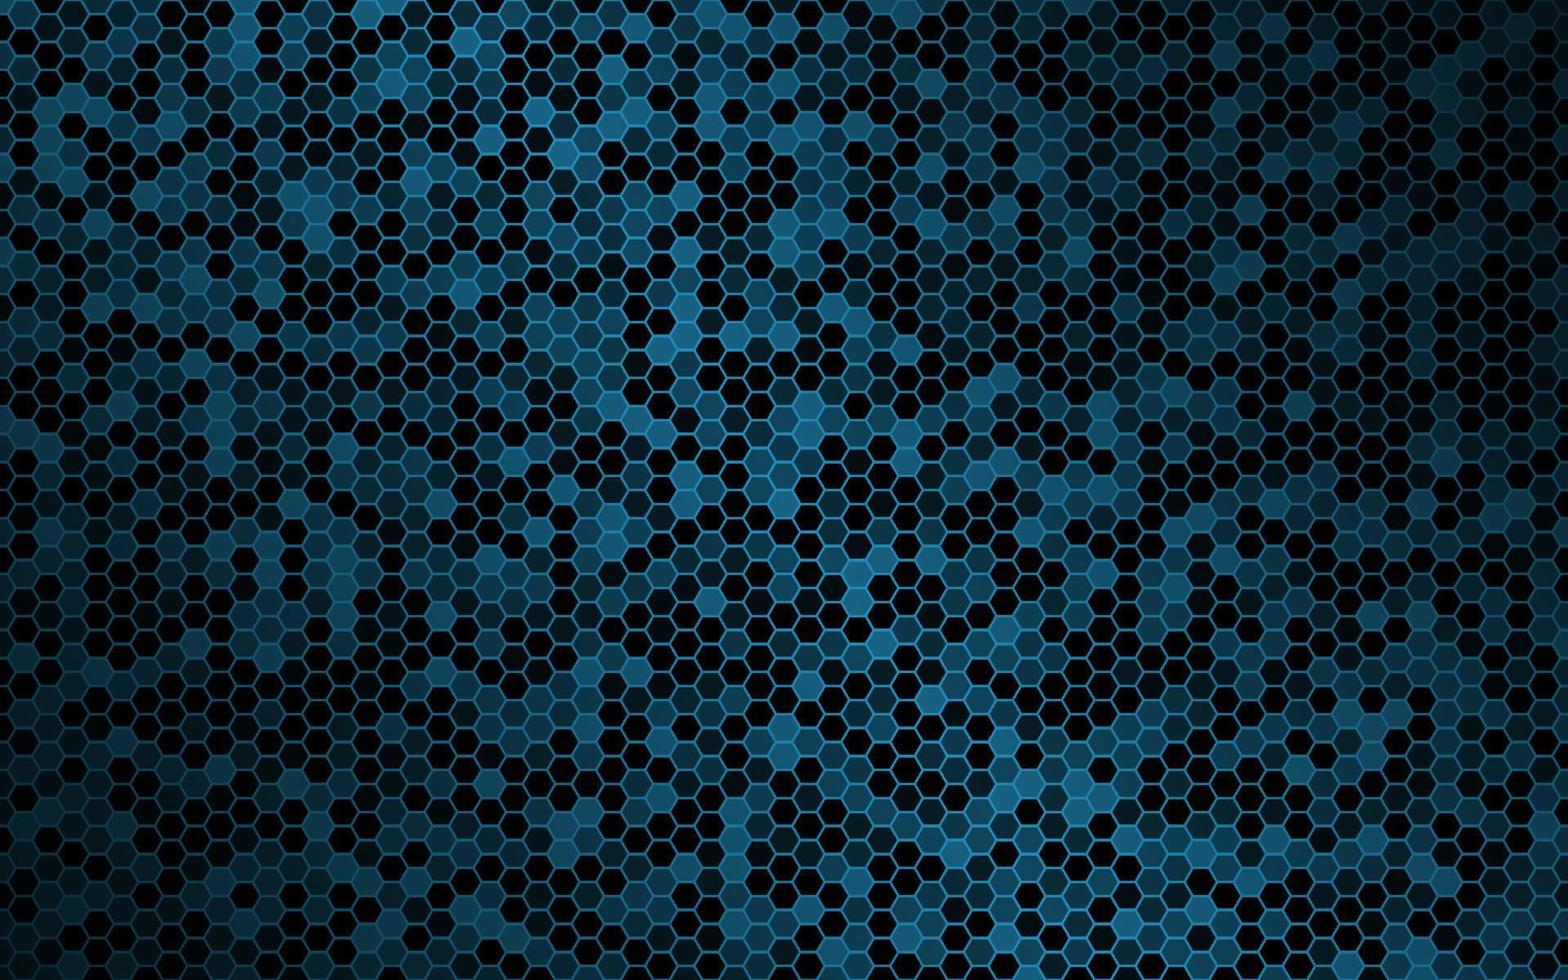 Dark blue vector background with hexagonal mesh. Modern geometric texture. Simple design illustration